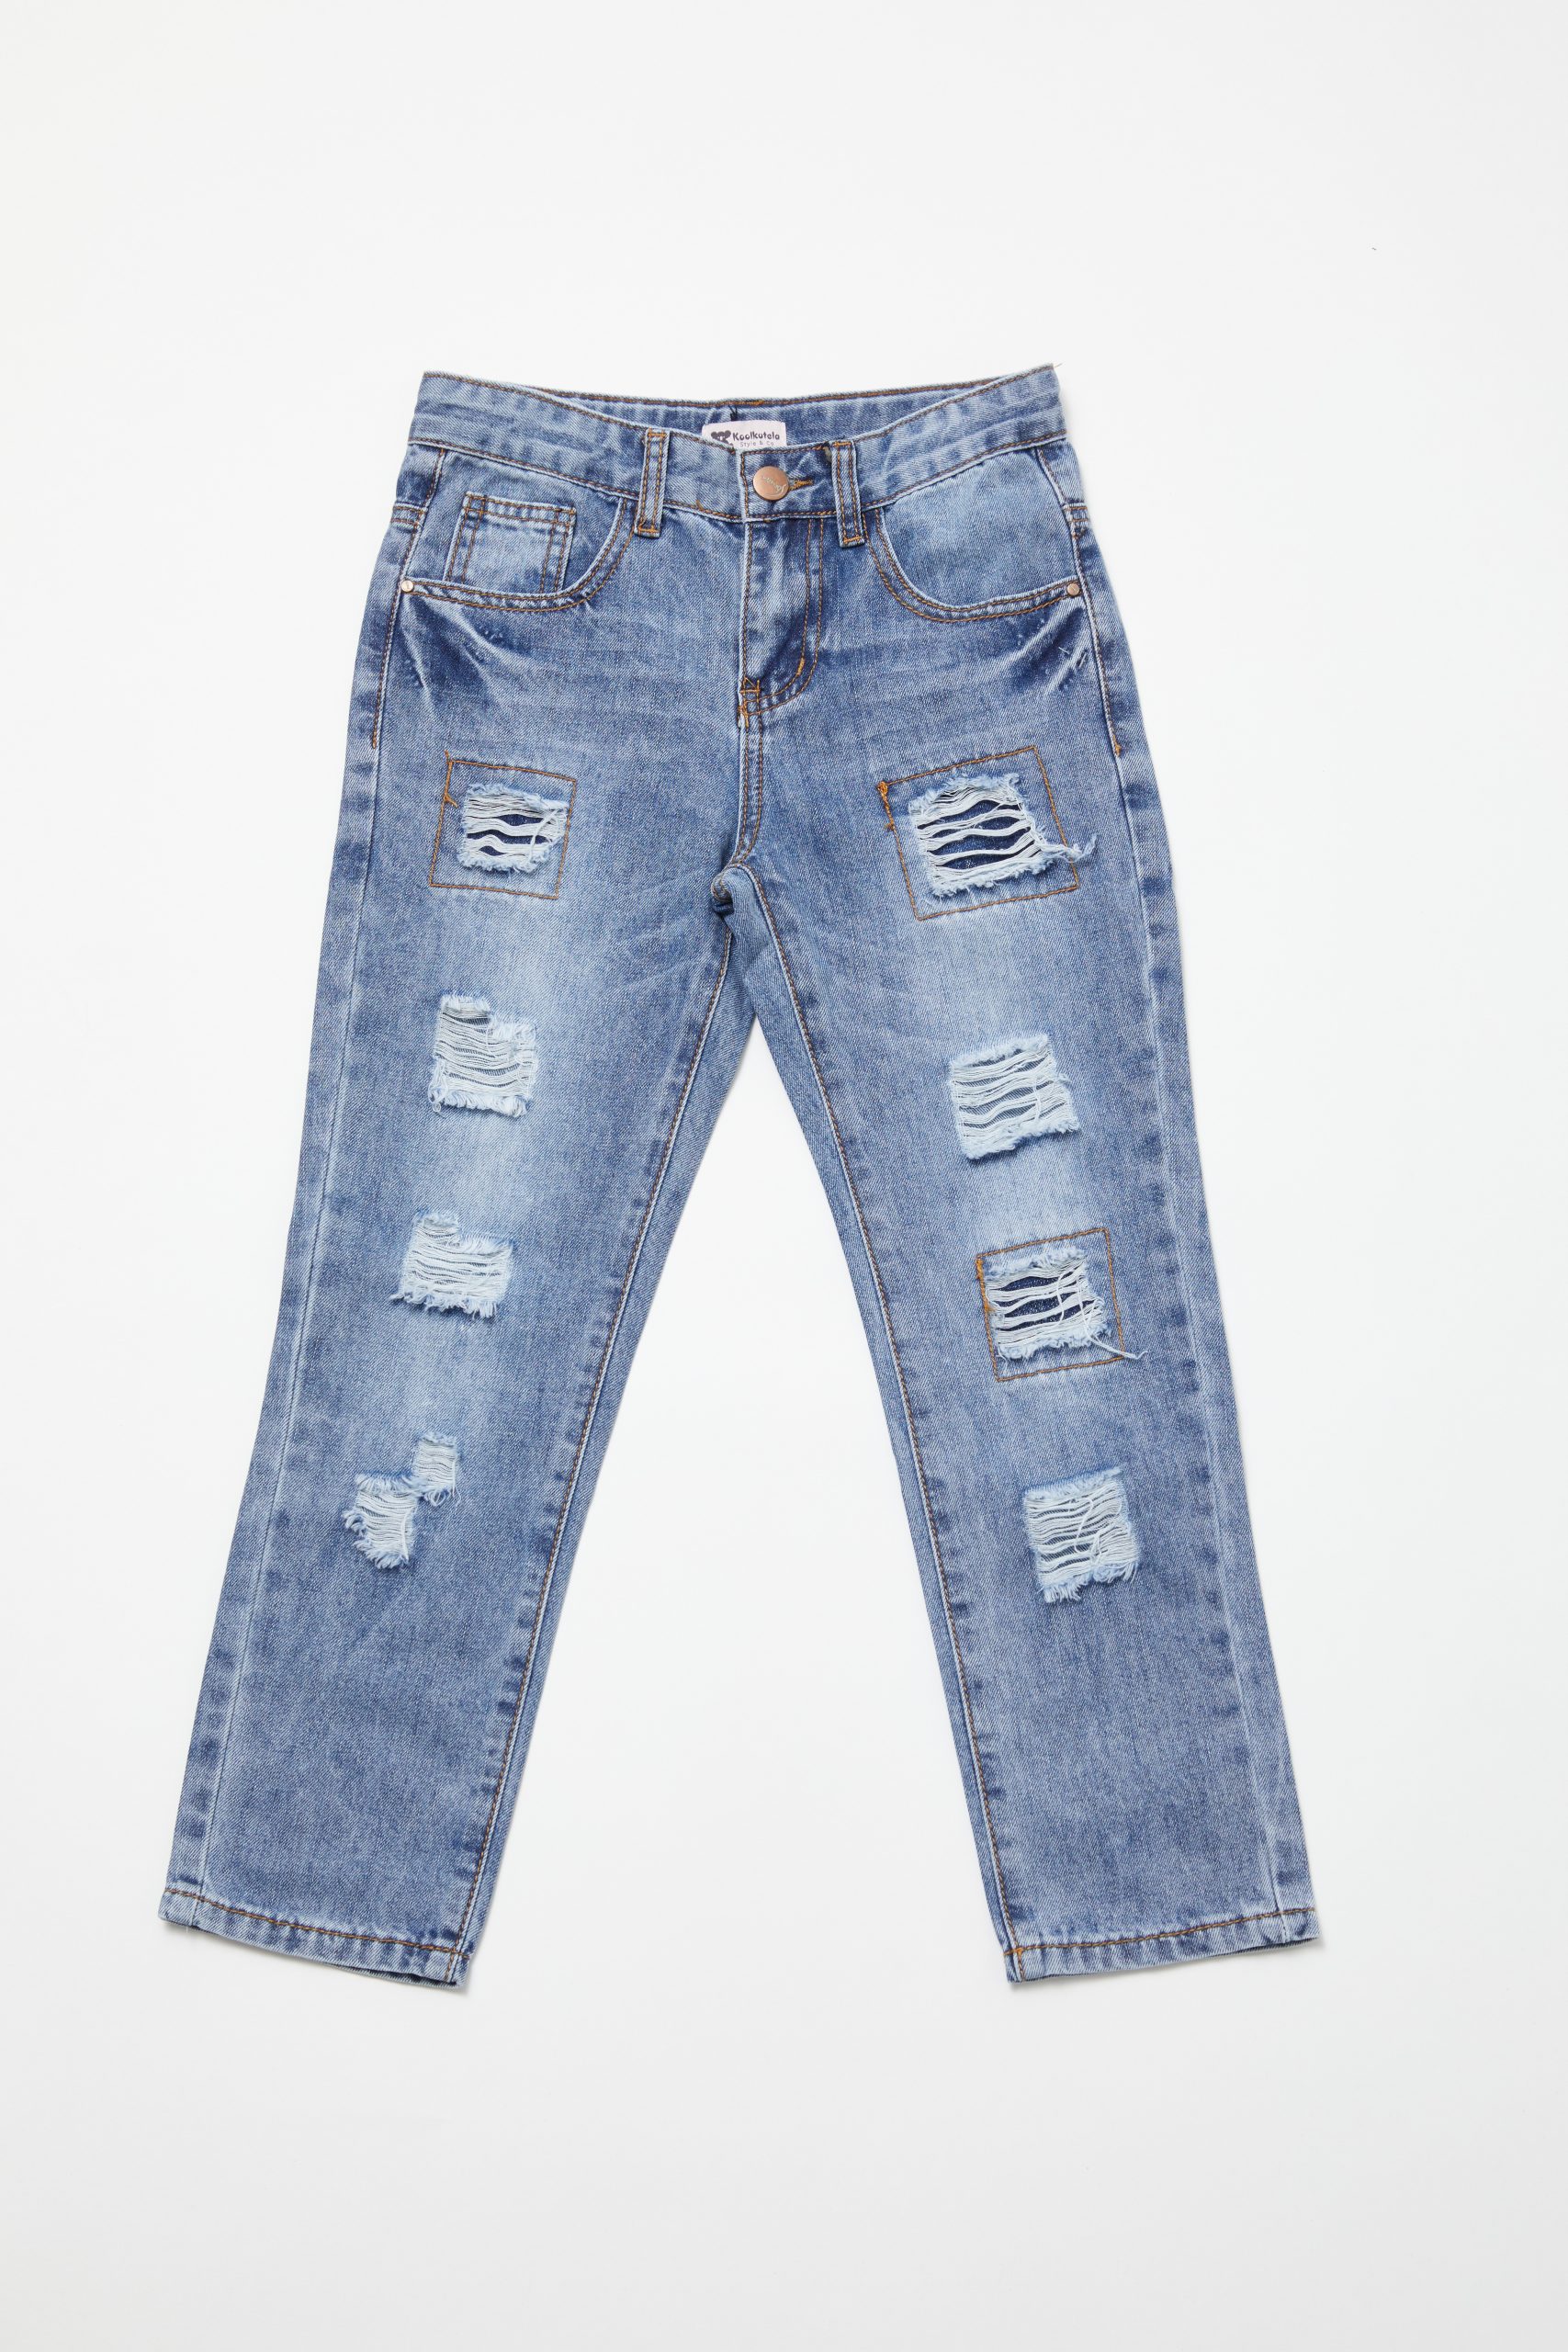 Boy Long Denim Jeans with Design - Koolkutela Fashion